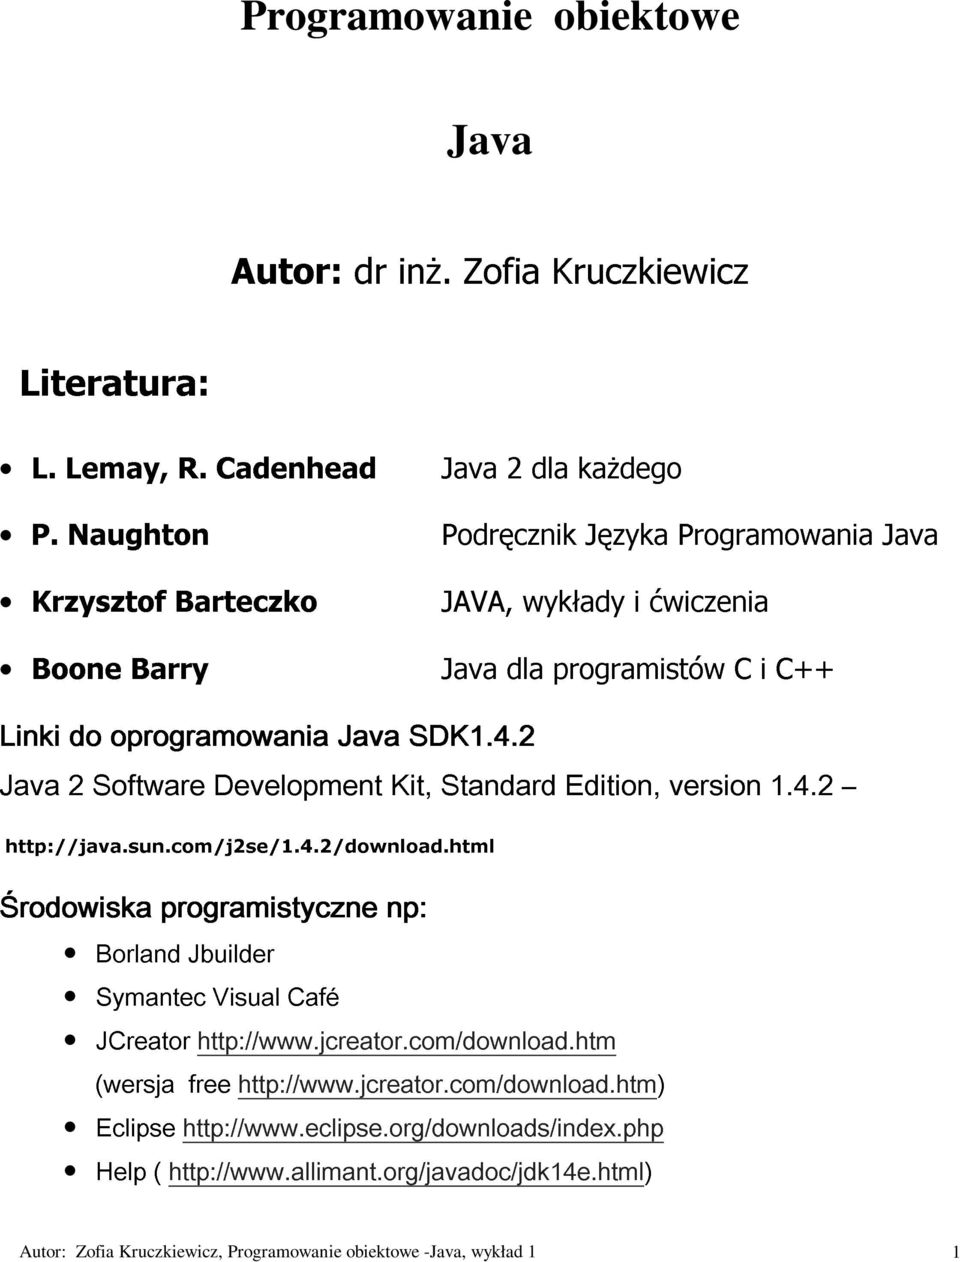 2 JAVA, Java dla wykłady programistów i ćwiczenia C i C++ Środowiska Java http://java.sun.com/j2se/1.4.2/download.html 2 Software Development Kit, Standard Edition, version 1.